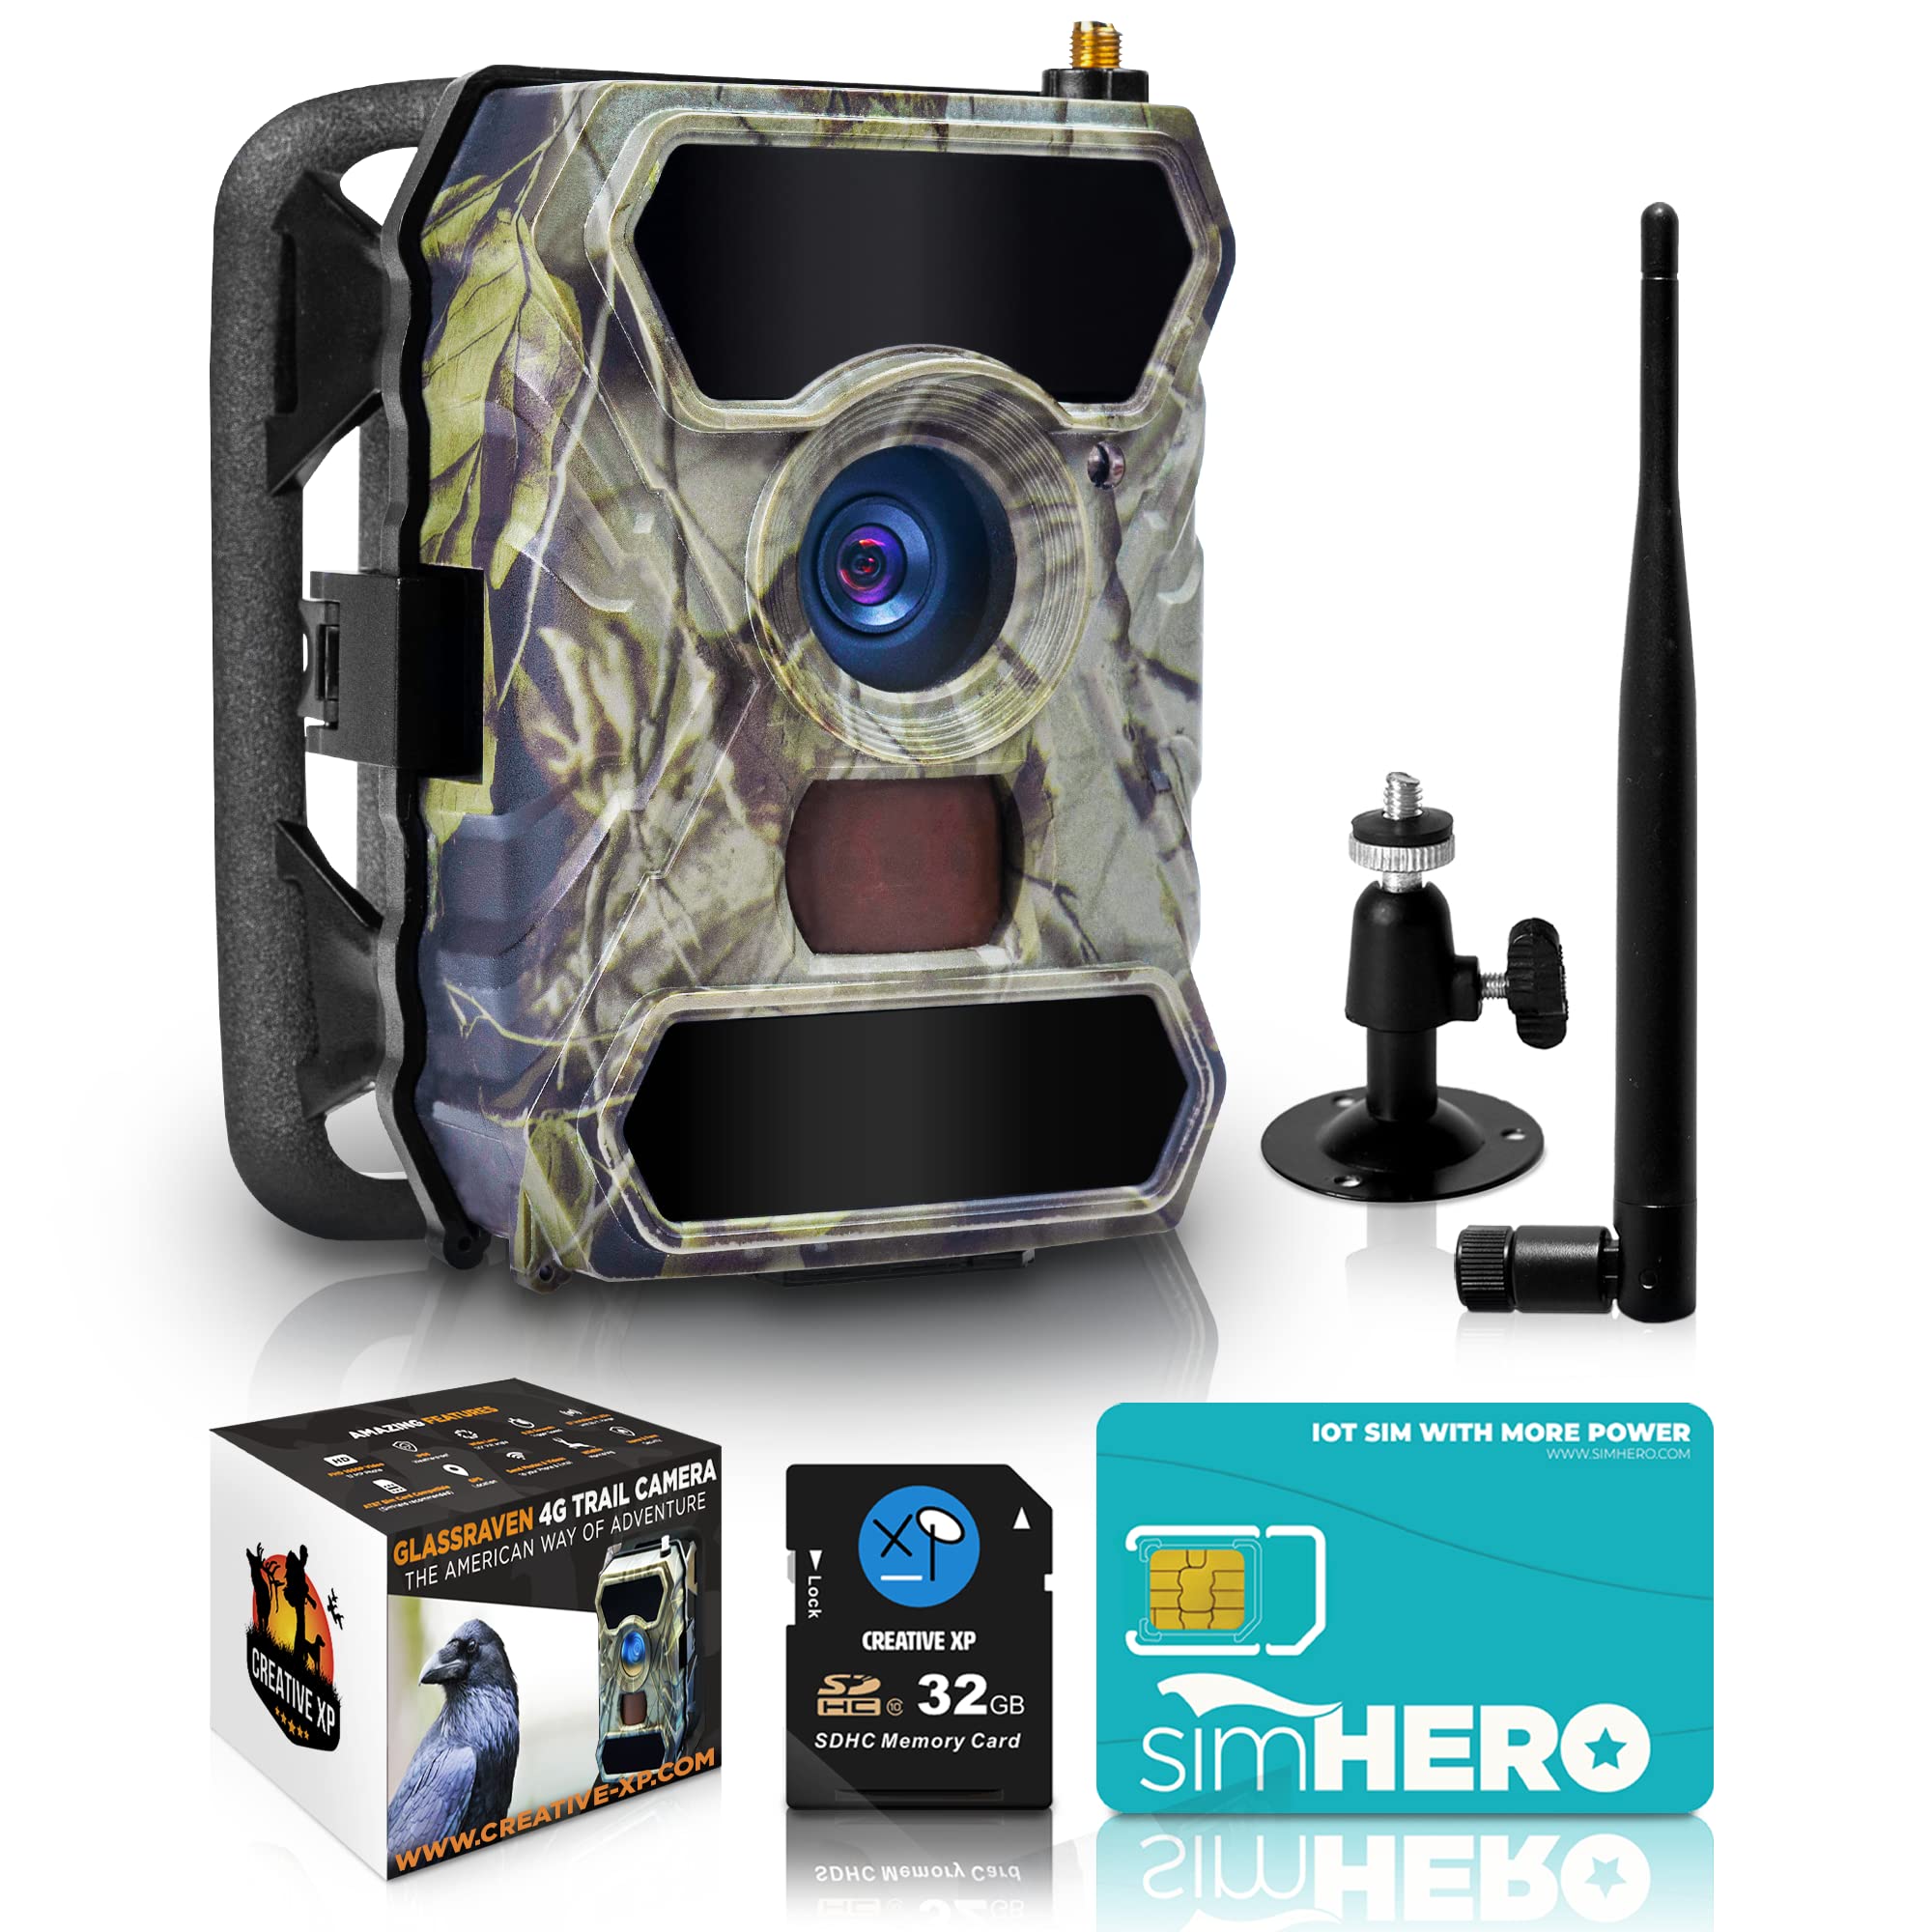 CREATIVE XP Cellular Trail Cameras - Waterproof  w/ Night Vision - 4G Camo (7752207401198)